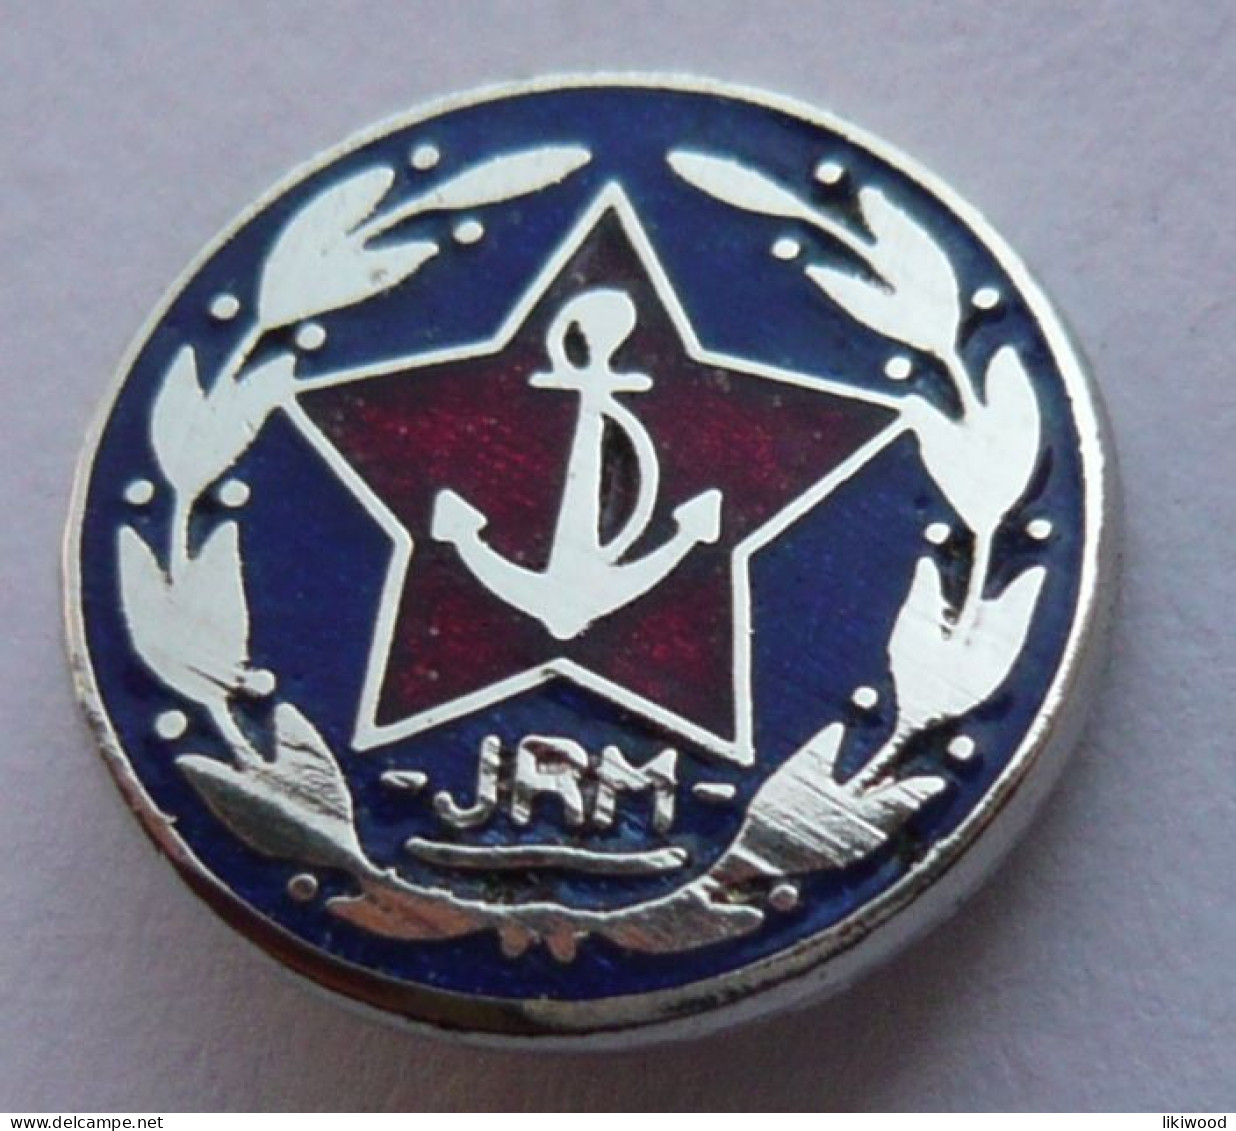 JRM Jugoslovenska Ratna Mornarica - Yugoslav Navy - Militari